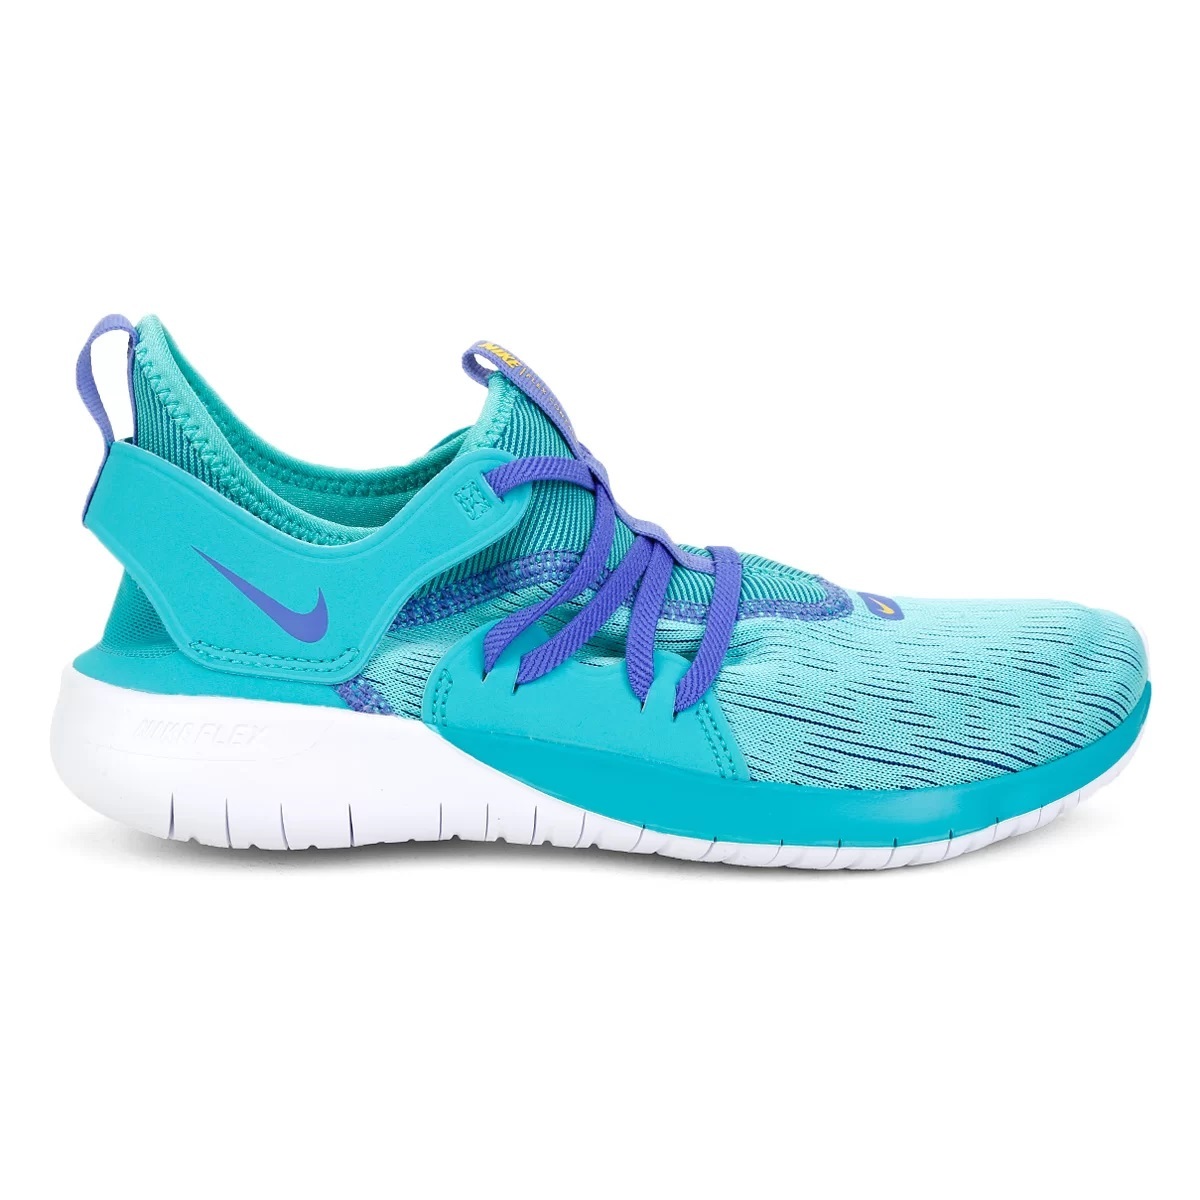 # Nike wi men's Flex Contact hyper Jade new goods 25.0cm US8 NIKE WMNS FLEX CONTACT 3 slip-on shoes AQ7488-300